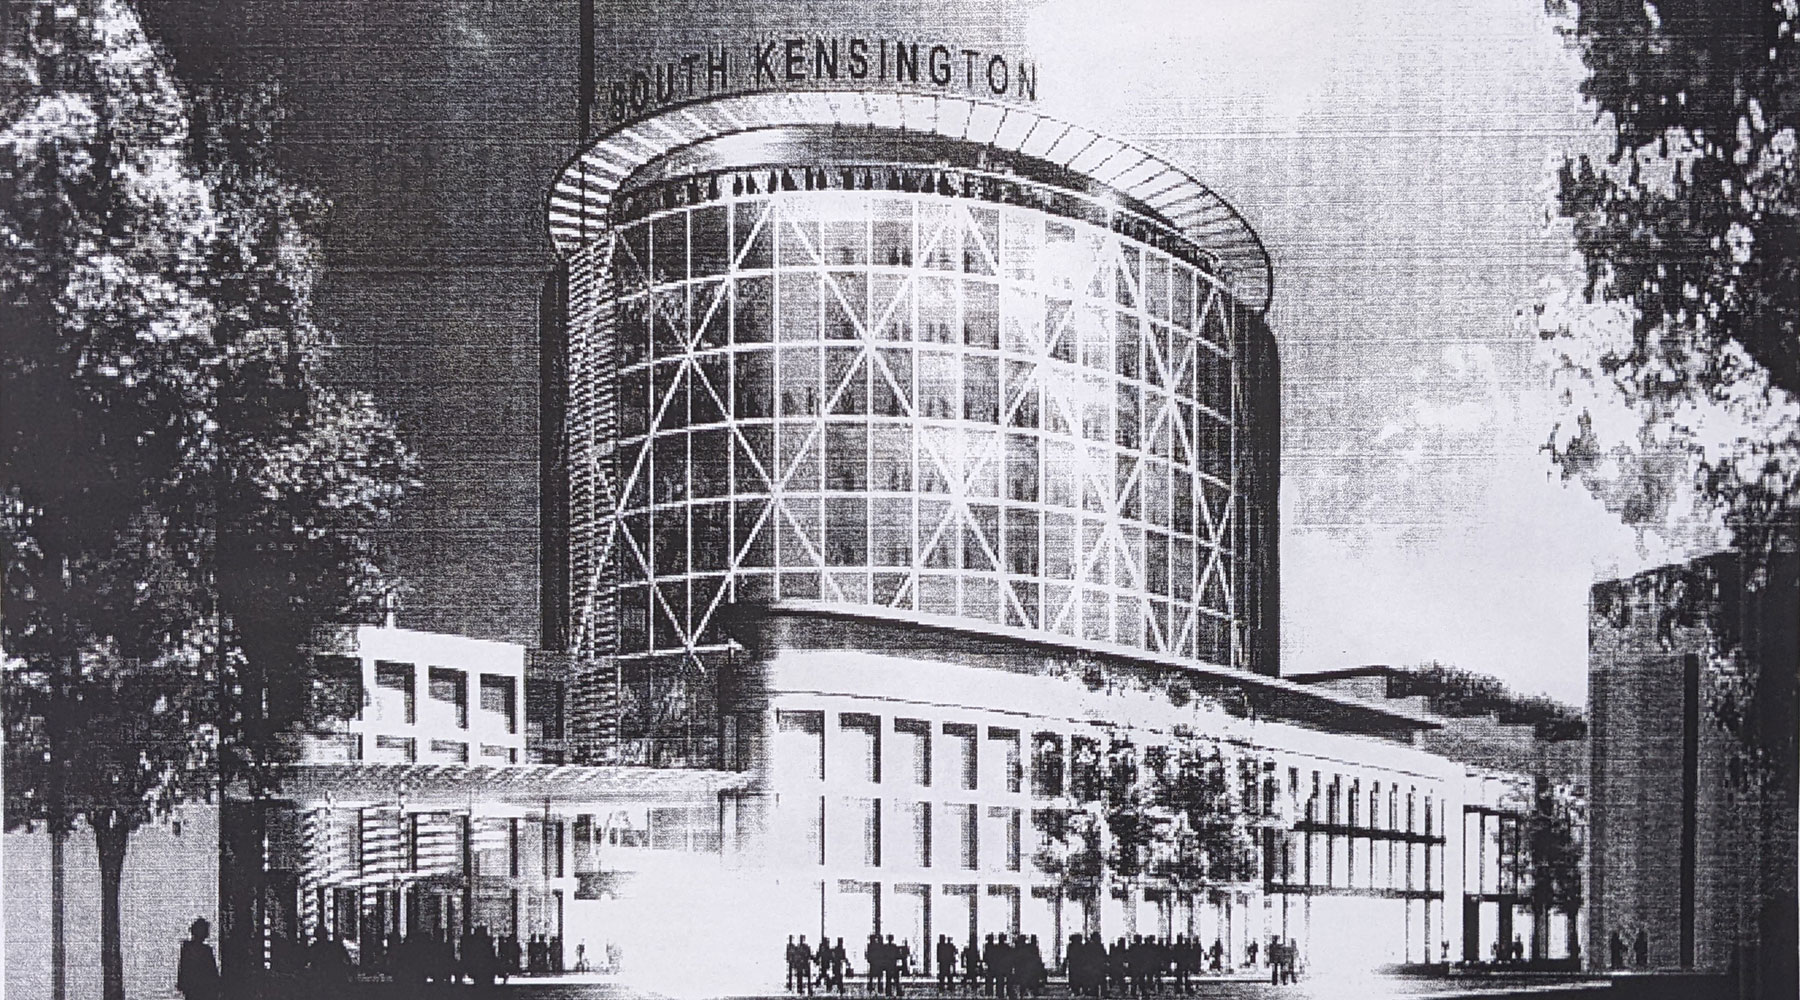 The unbuilt plans for hotels above South Kensington tube station